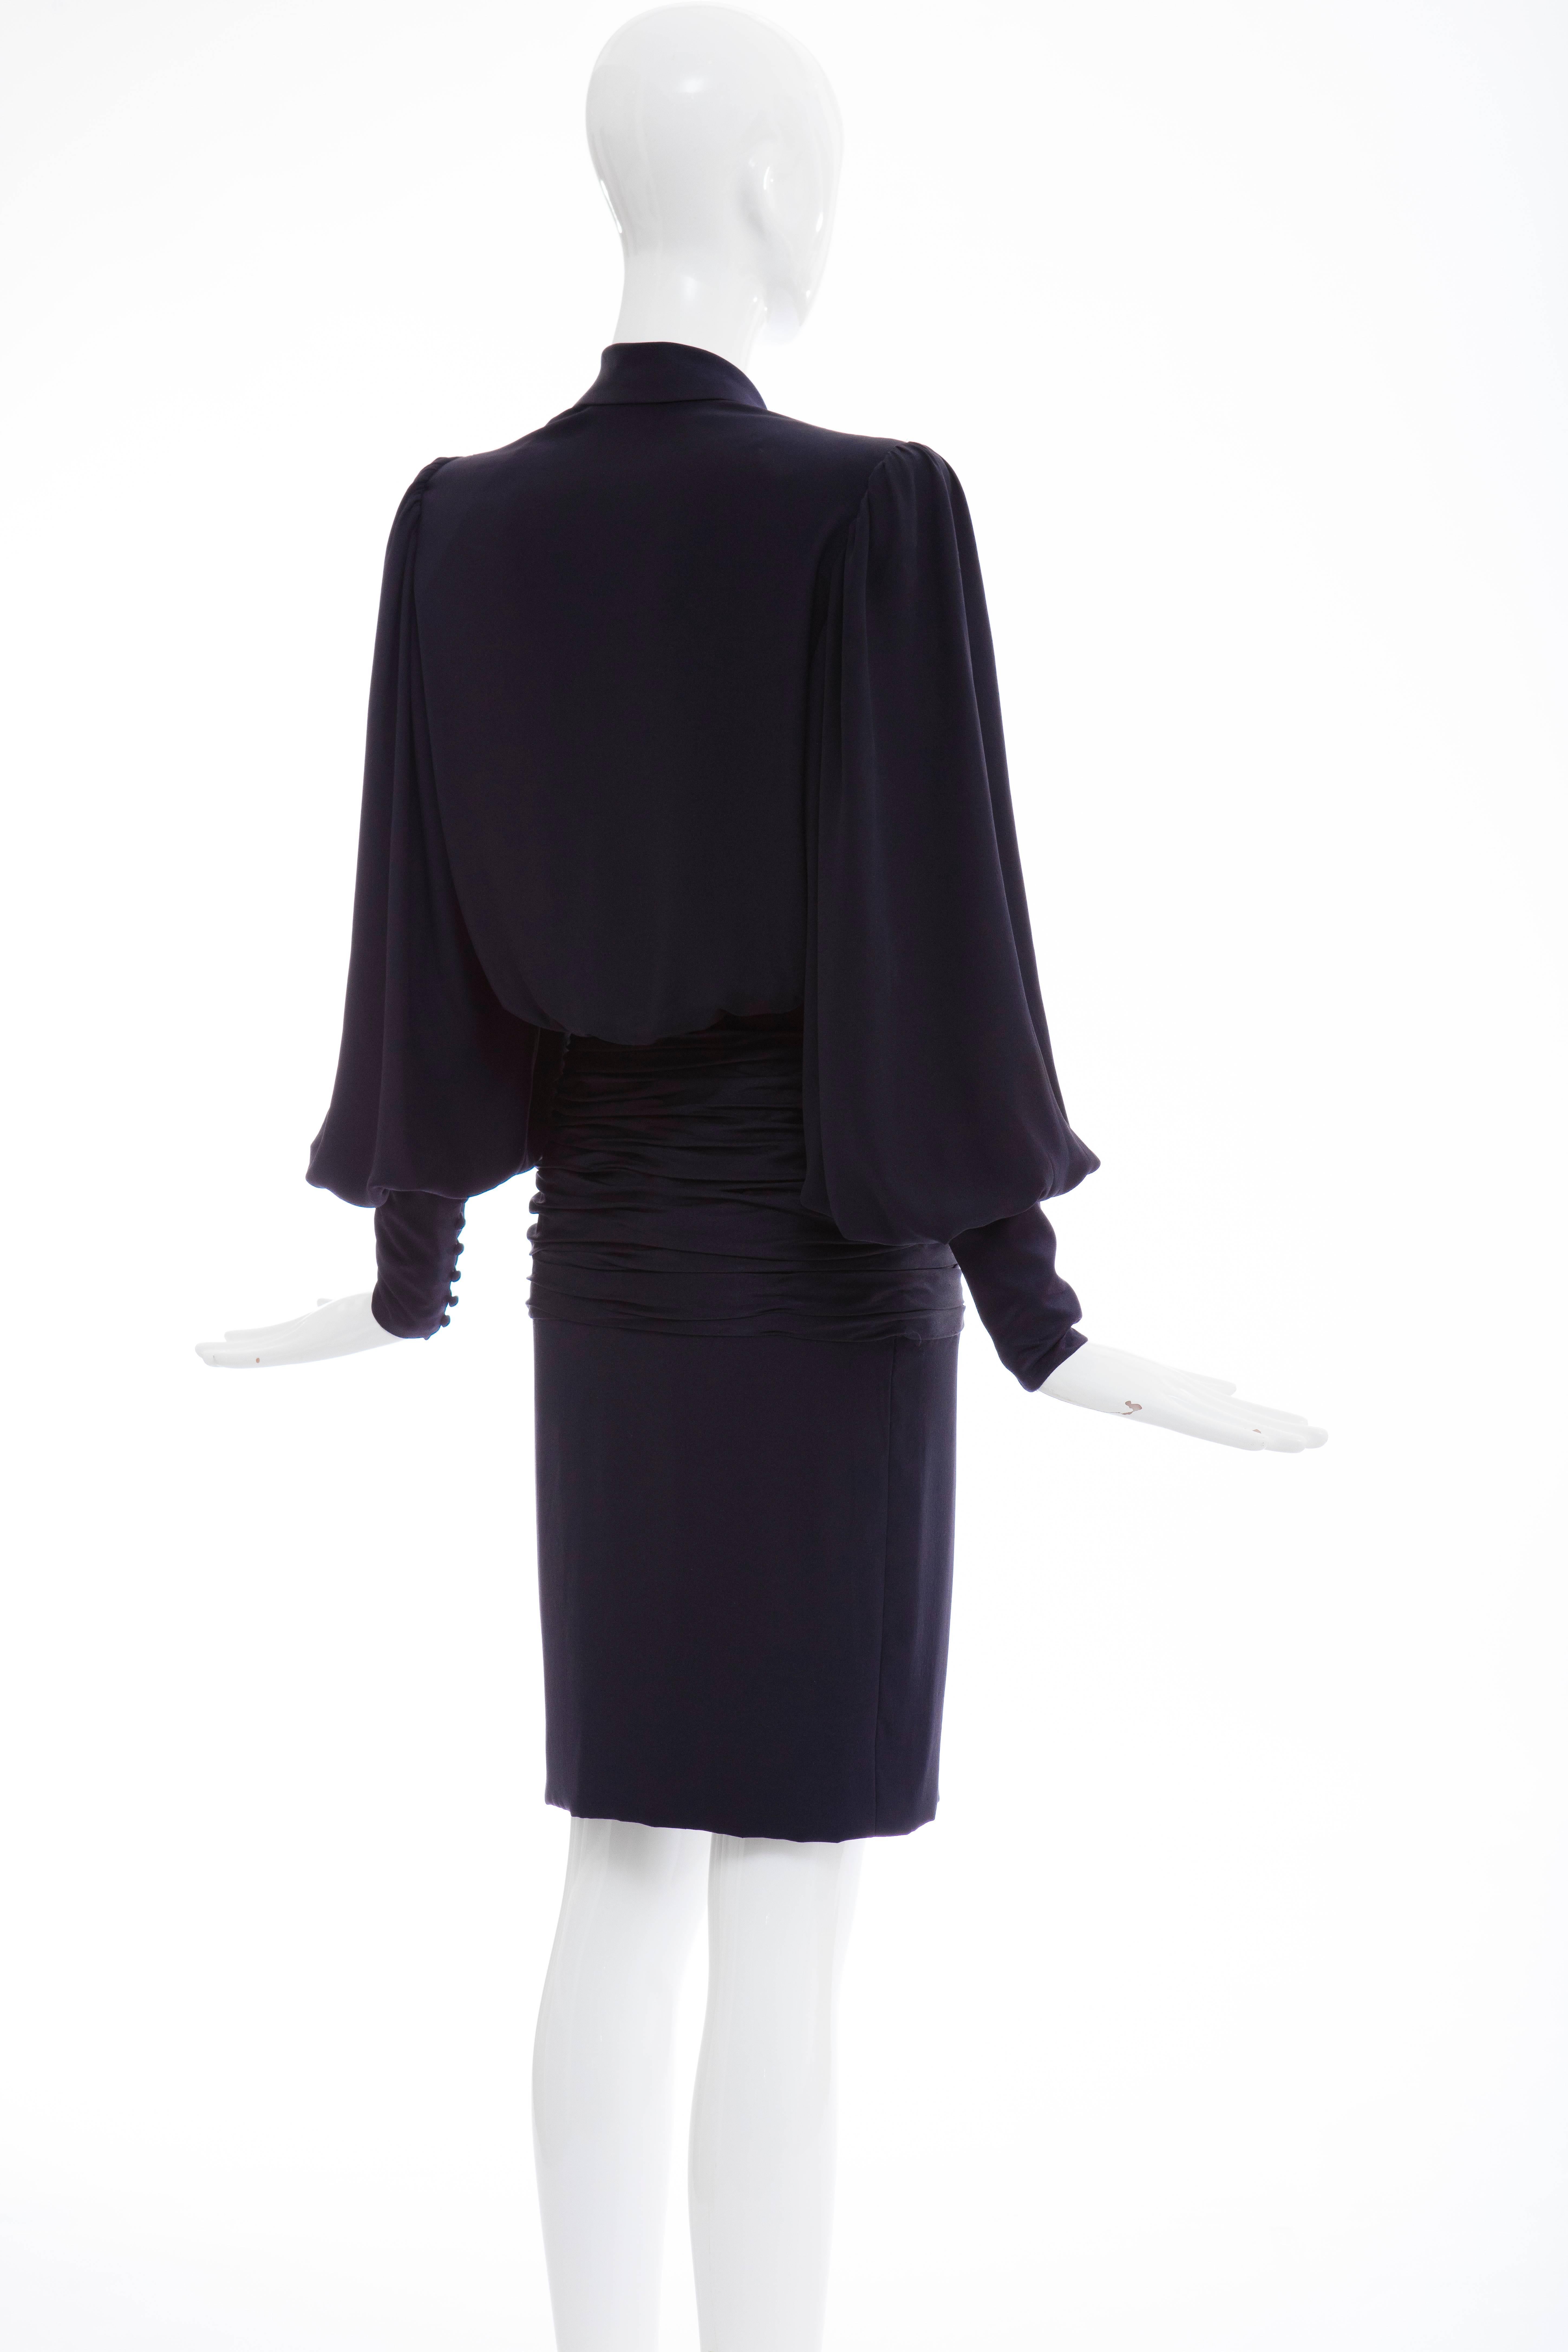 Jean - Louis Scherrer Haute Couture Navy Silk Crepe & Satin Dress, Circa 1980's For Sale 3